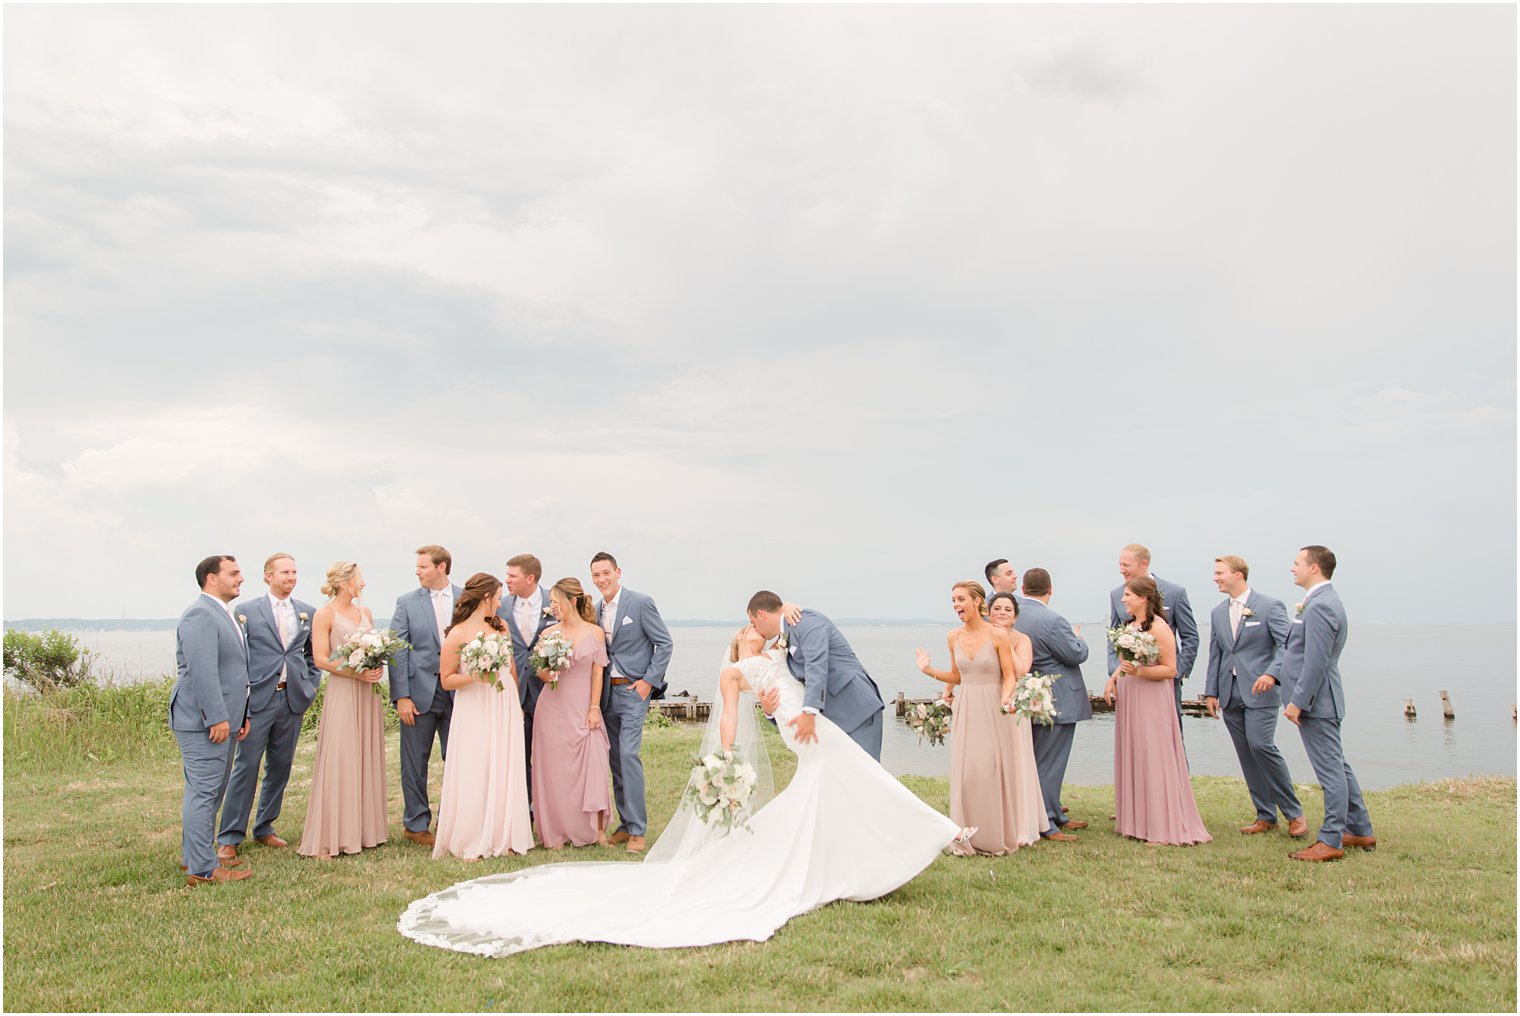 Romantic wedding party portraits by New Jersey photographer Idalia Photography